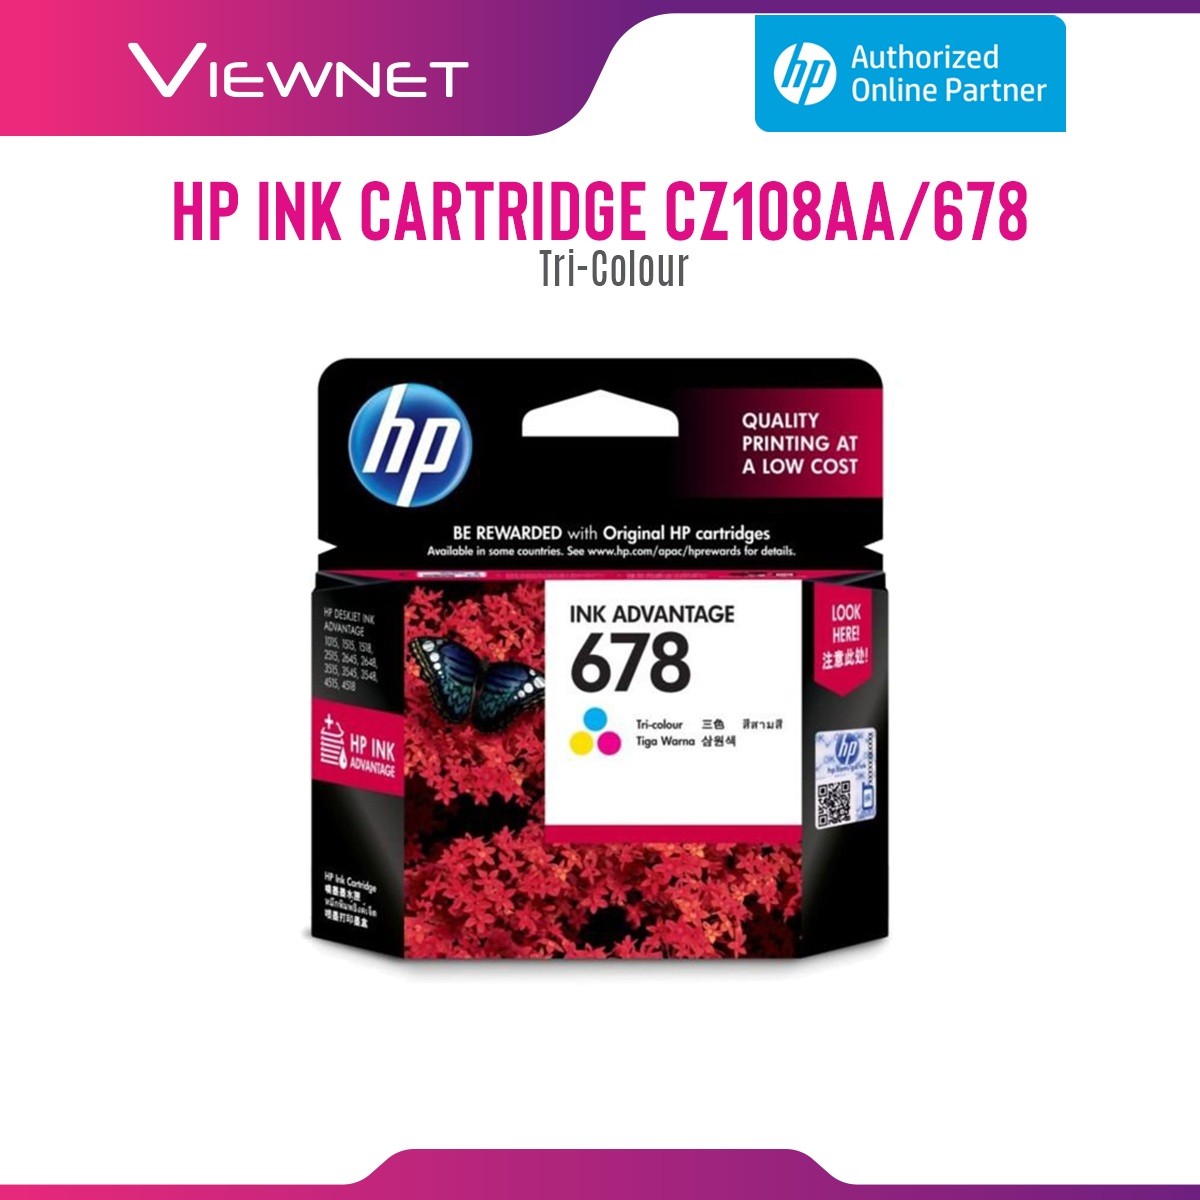 HP 678 Original Ink Advantage Cartridge CZ108AA/678 Ink (Tri-Color)